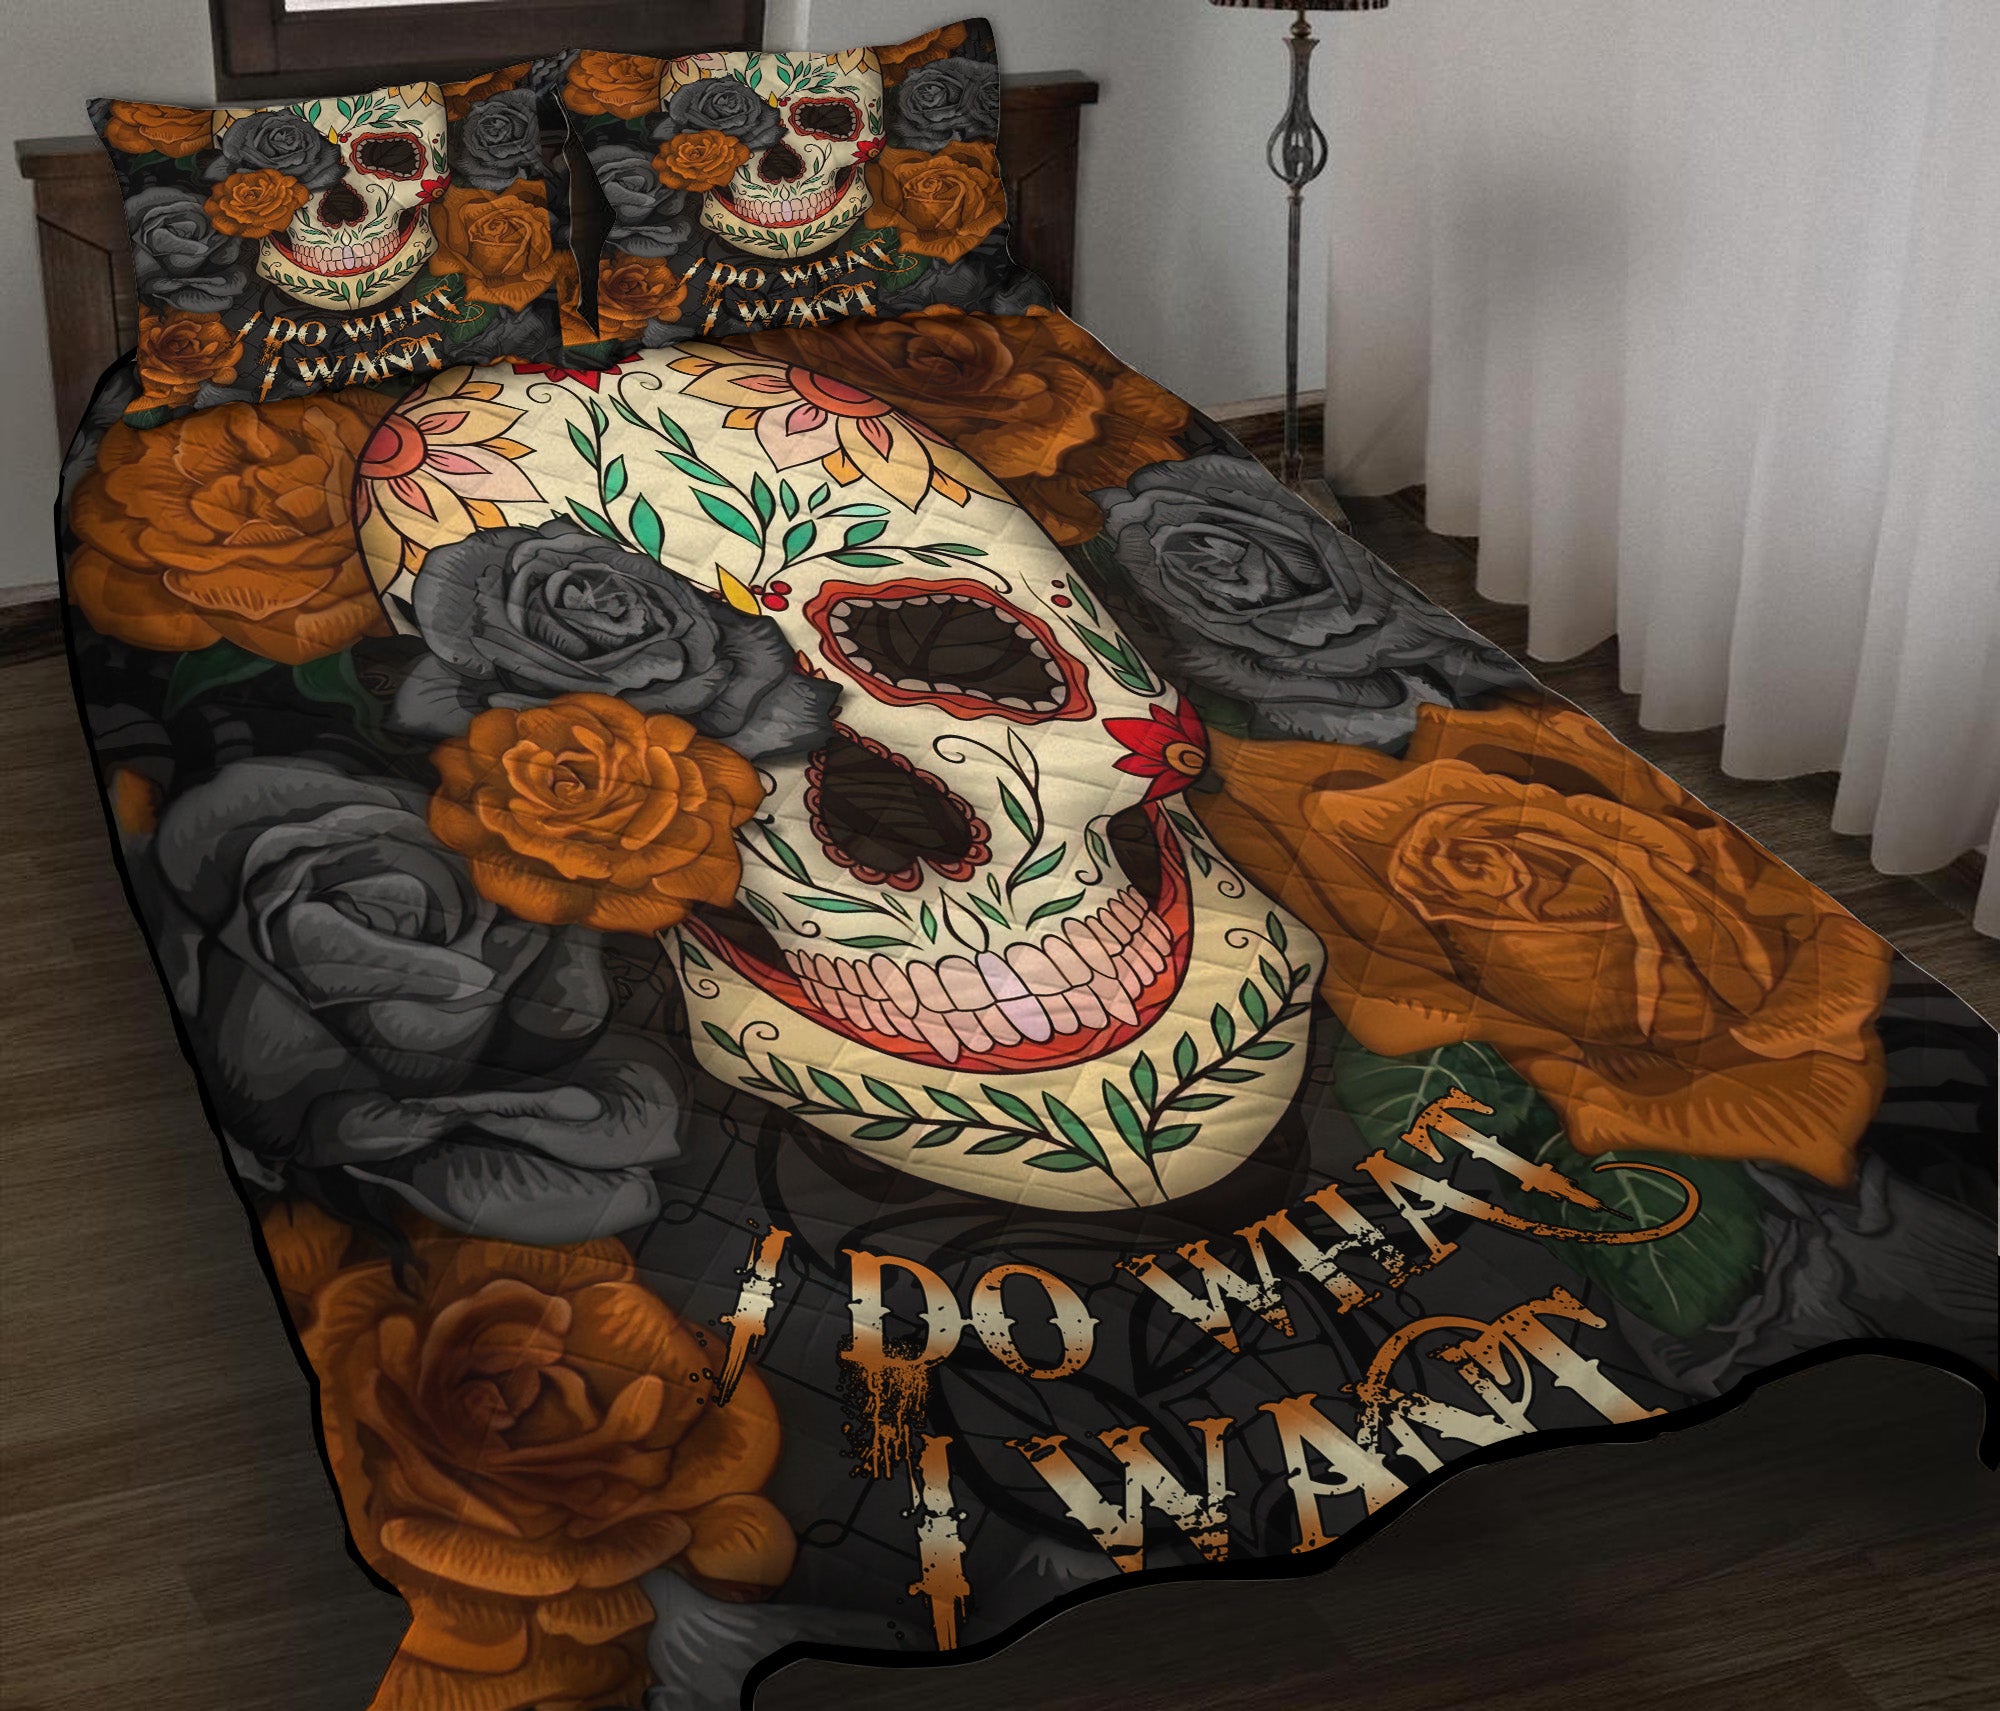 I Do What I Want Skull Roses Mandala Quilt Bed Sets Nearkii